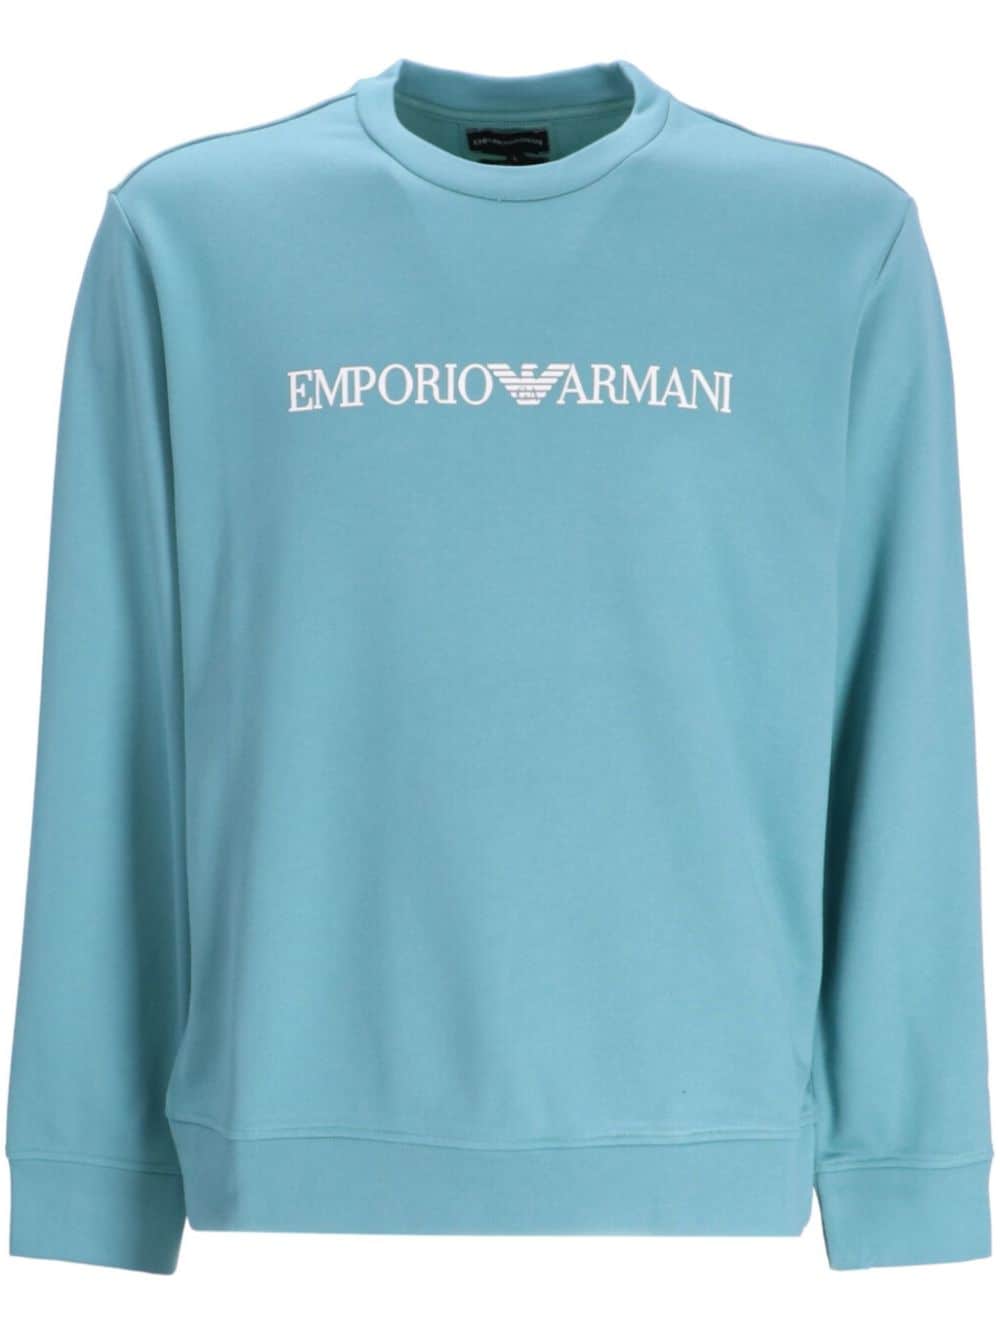 Emporio Armani Sweatshirt mit Logo - Blau von Emporio Armani